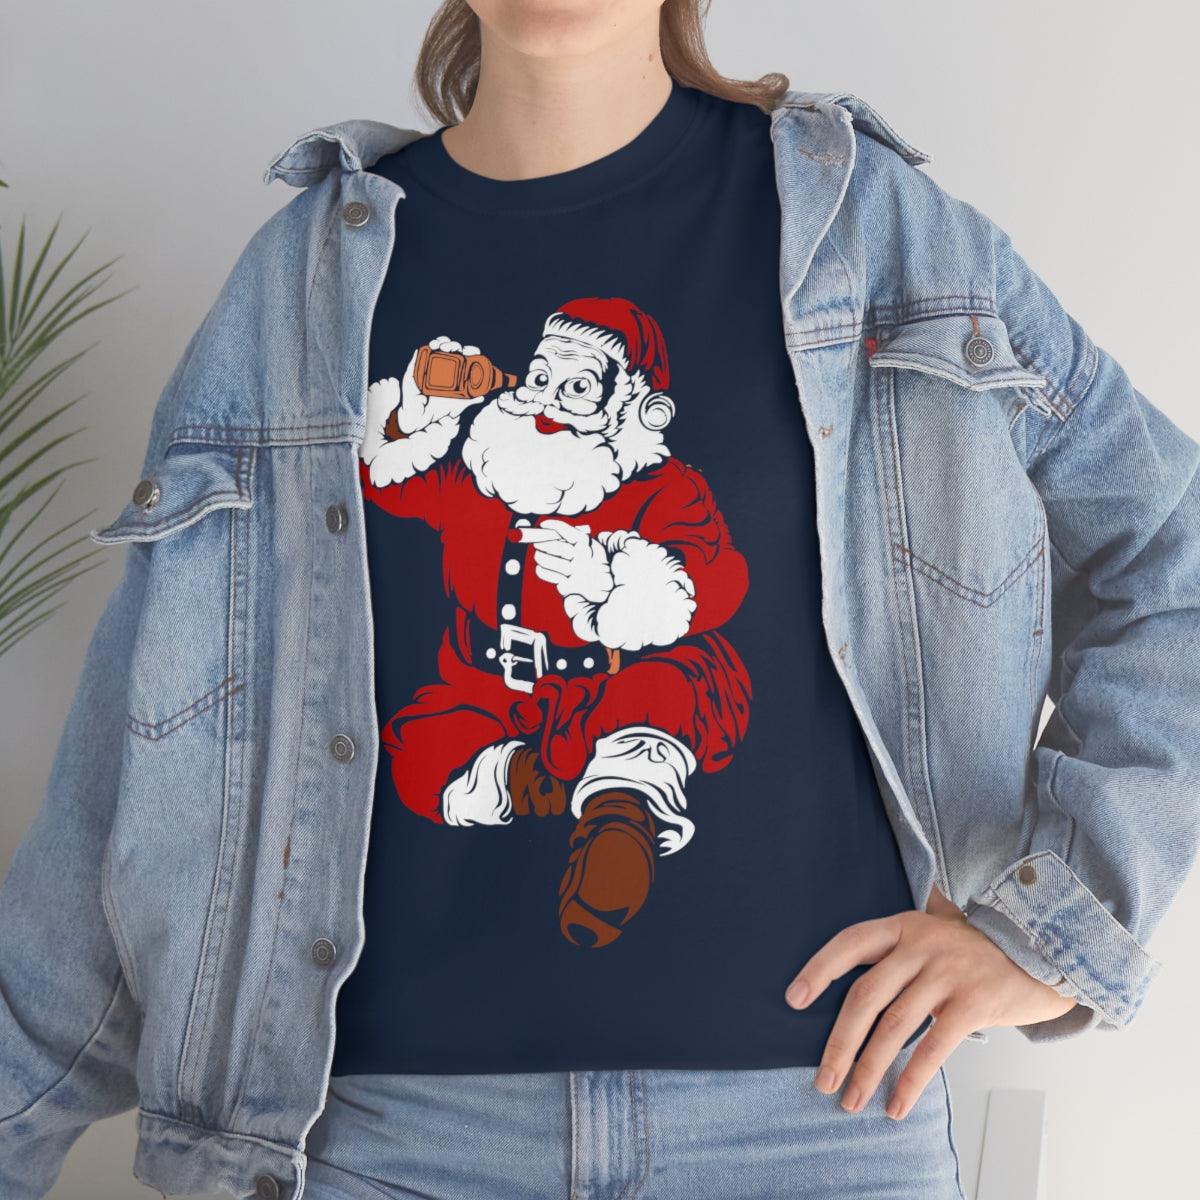 Santa Drinking Beer Funny T-shirt Funny Christmas Shirt Funny Santa Shirt Santa Gift - Giftsmojo